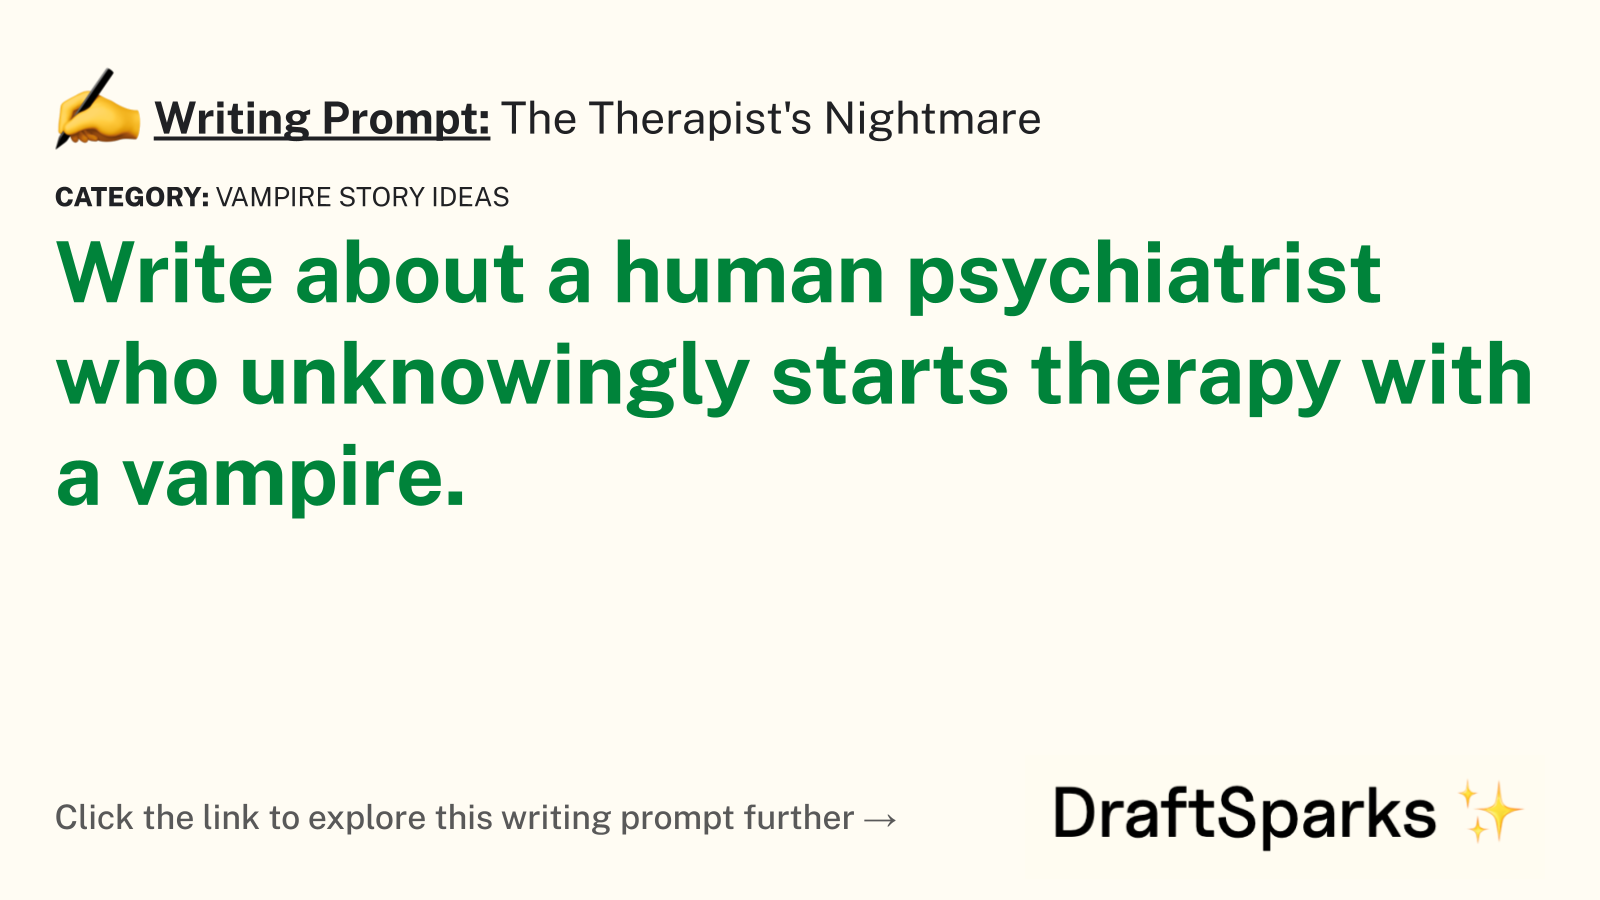 The Therapist’s Nightmare